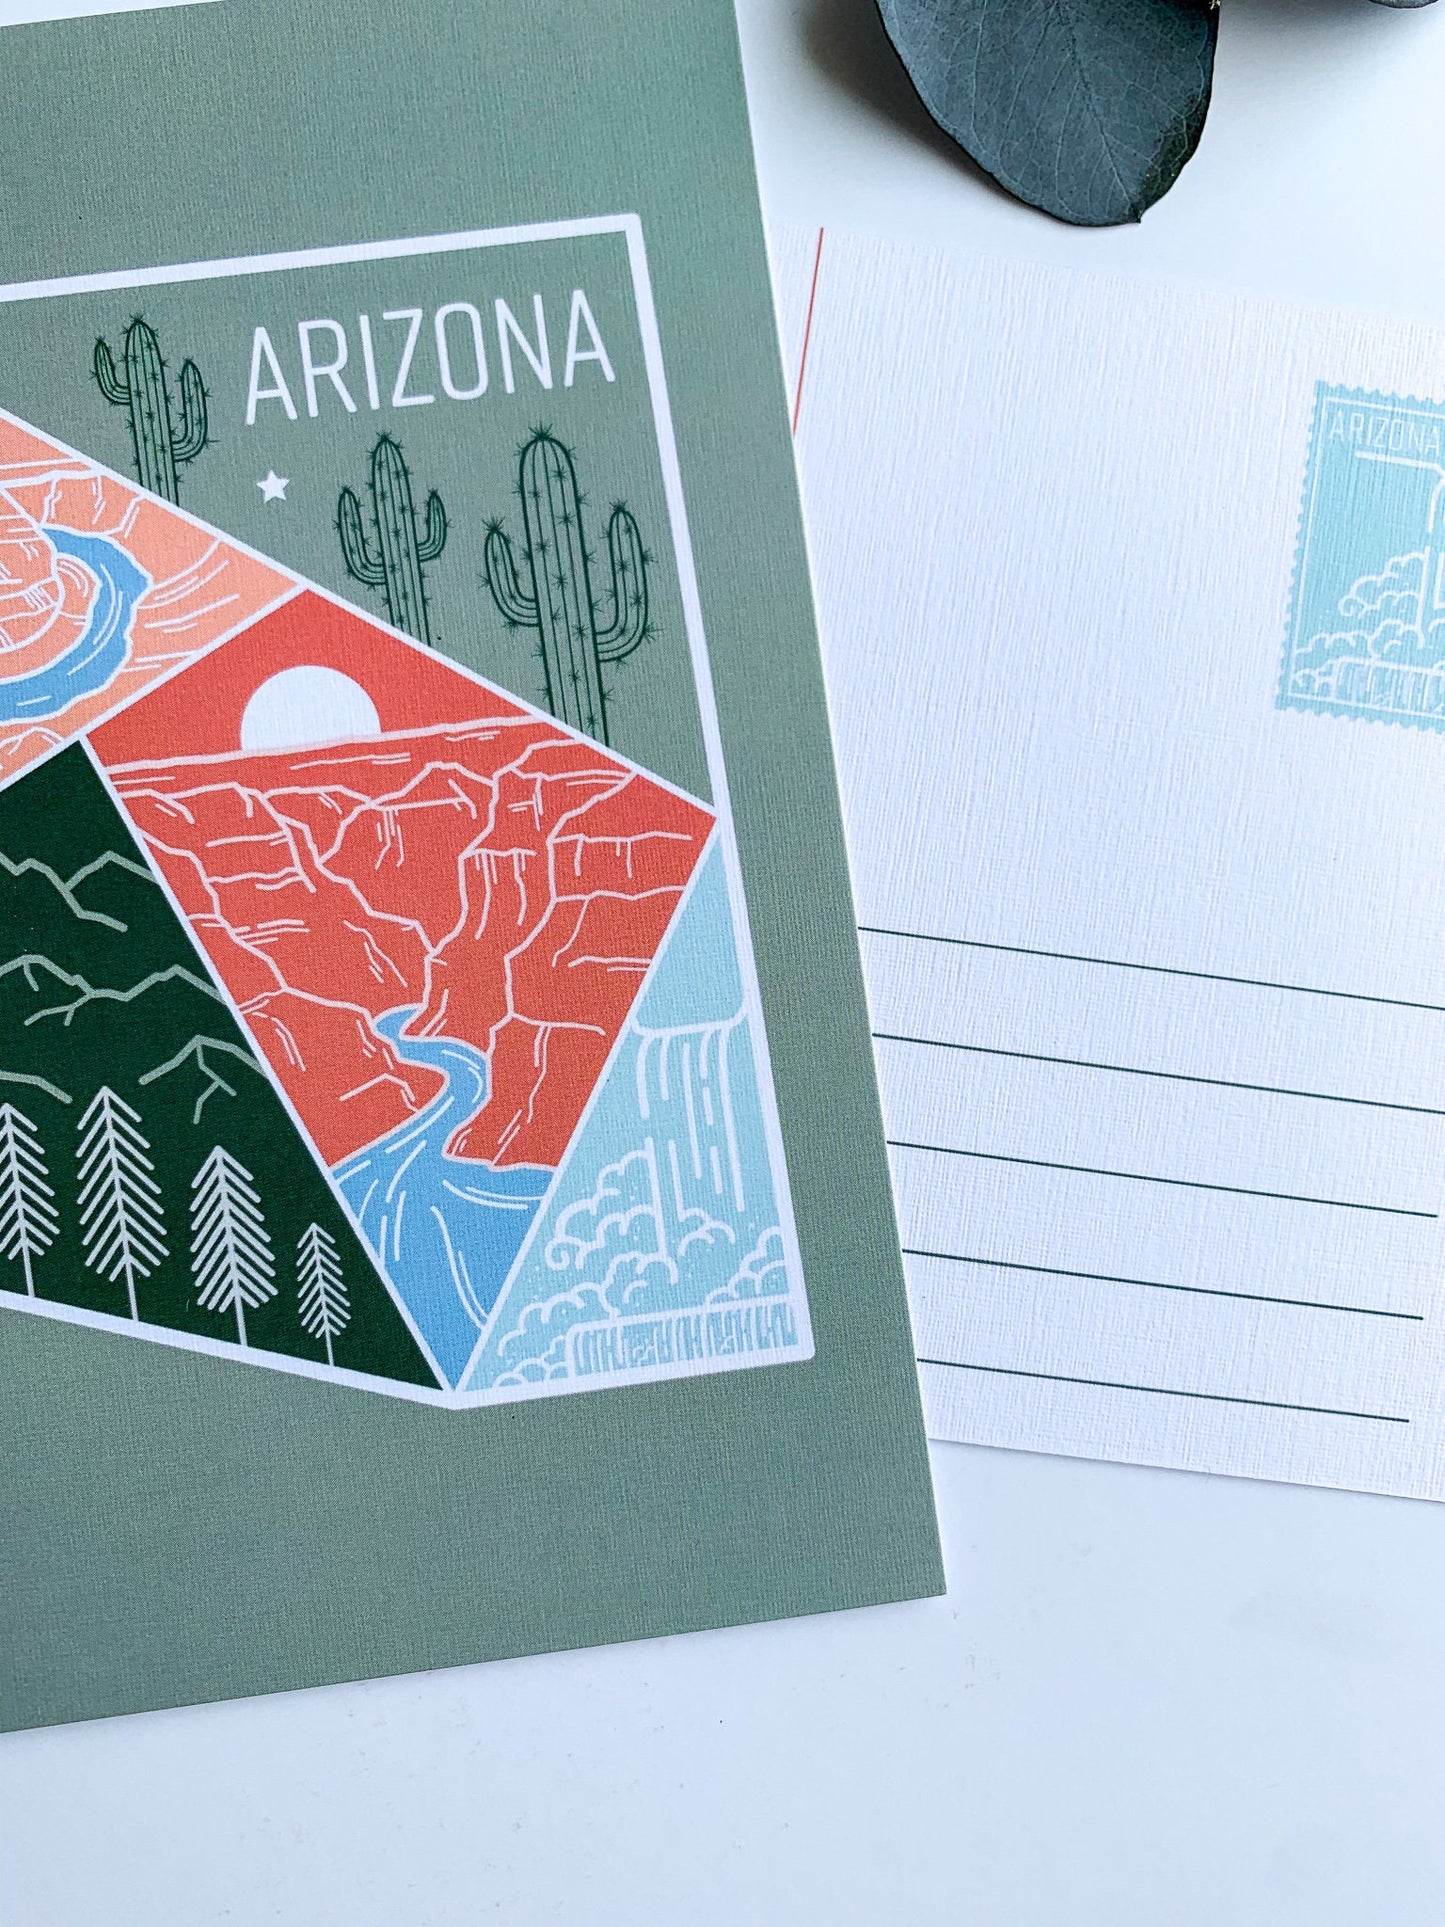 Arizona Travel Postcard